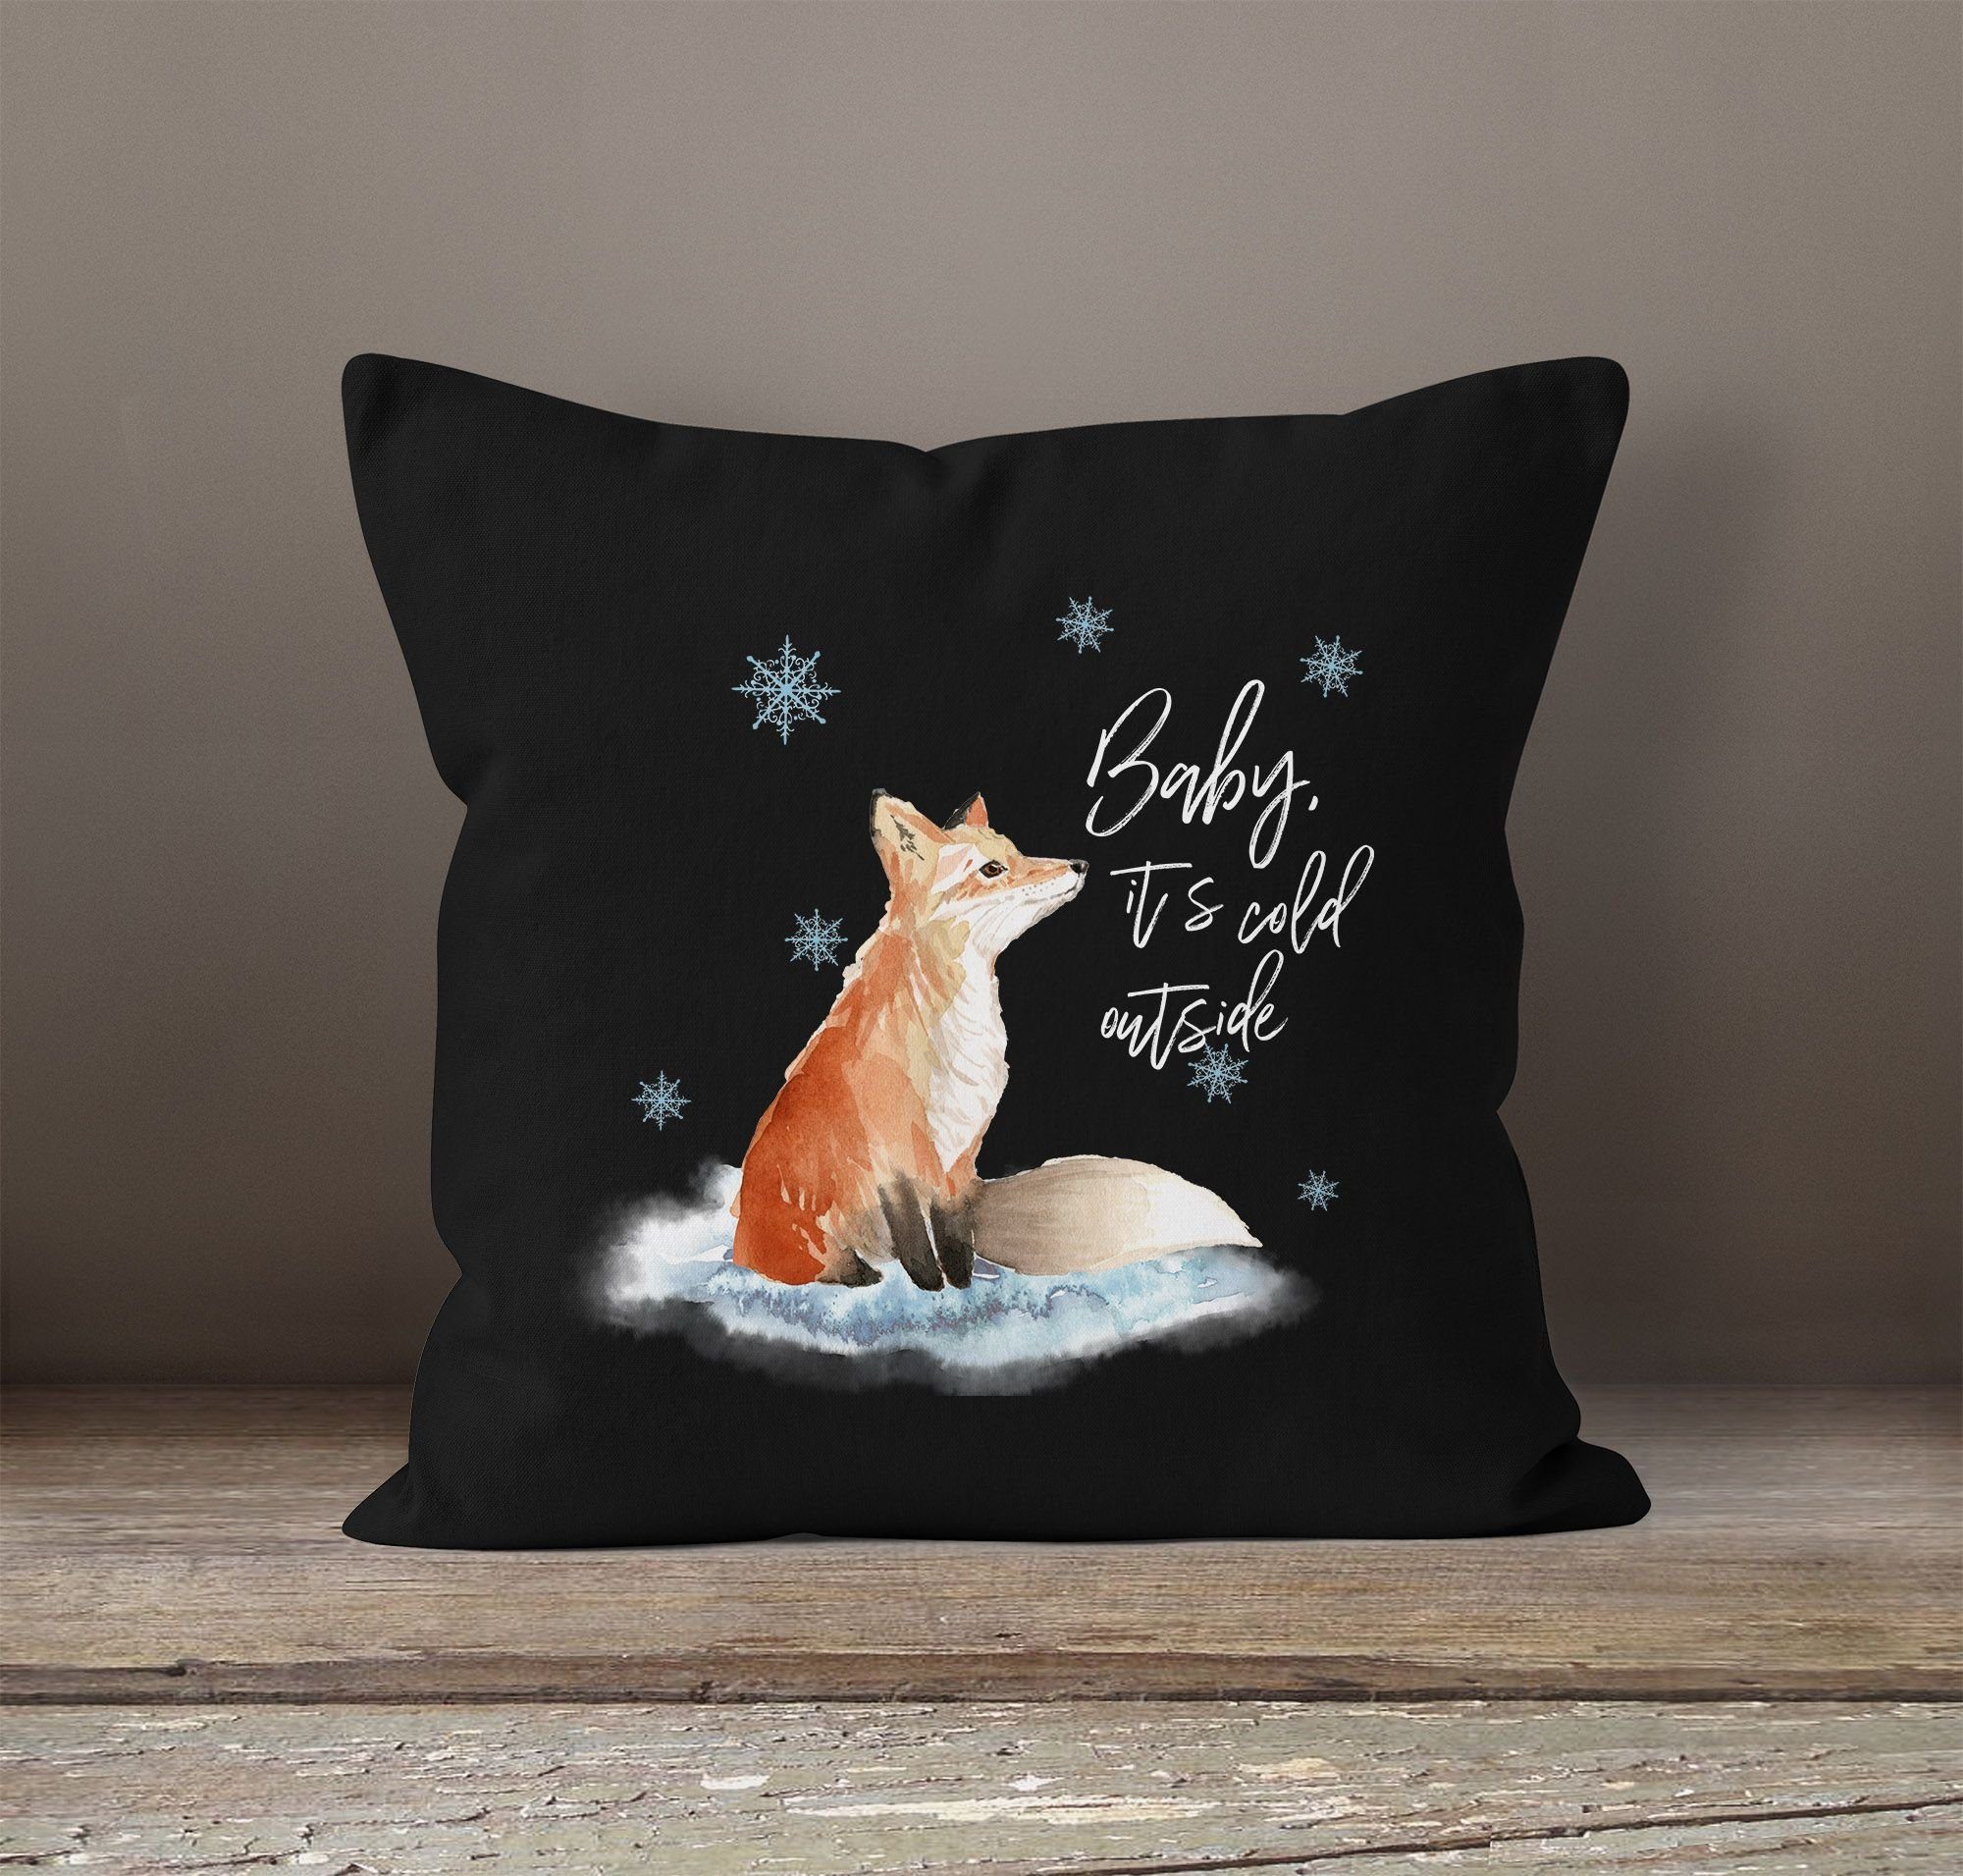 Winter Schnee Dekokissen schwarz outside Baby Weihnachten cold it`s Autiga Kissenbezug Kissen-Hülle Autiga® Fox Fuchs